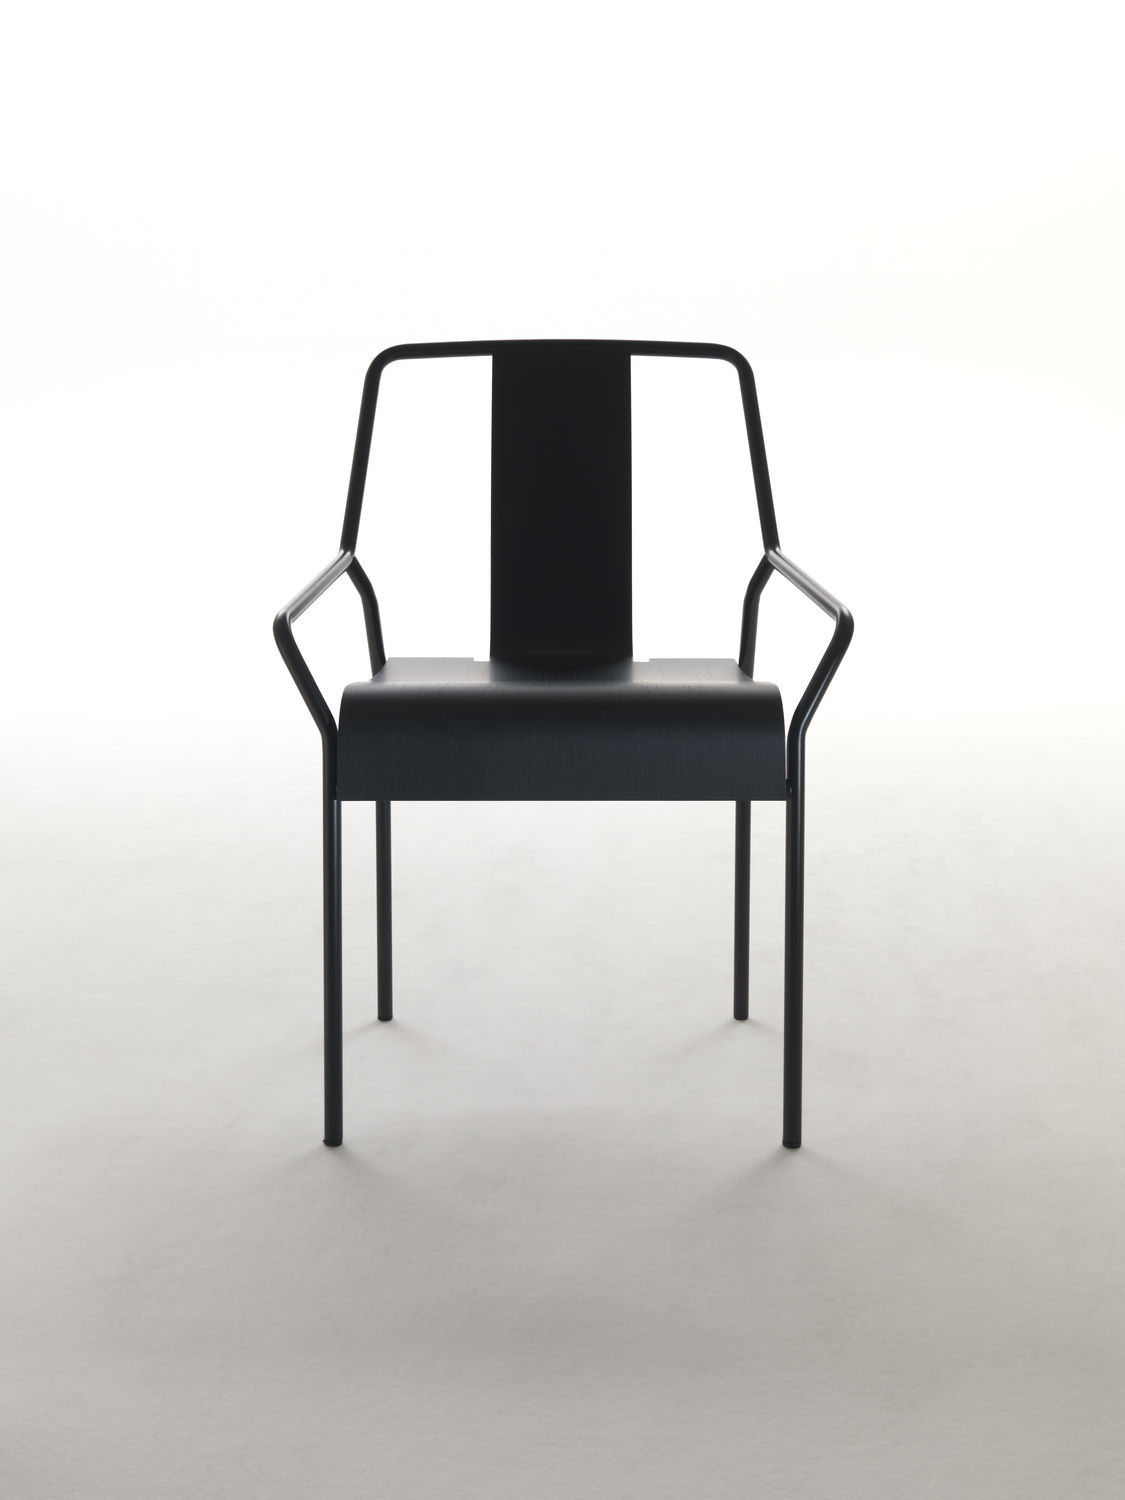 Dao Chair by Shin Azumi